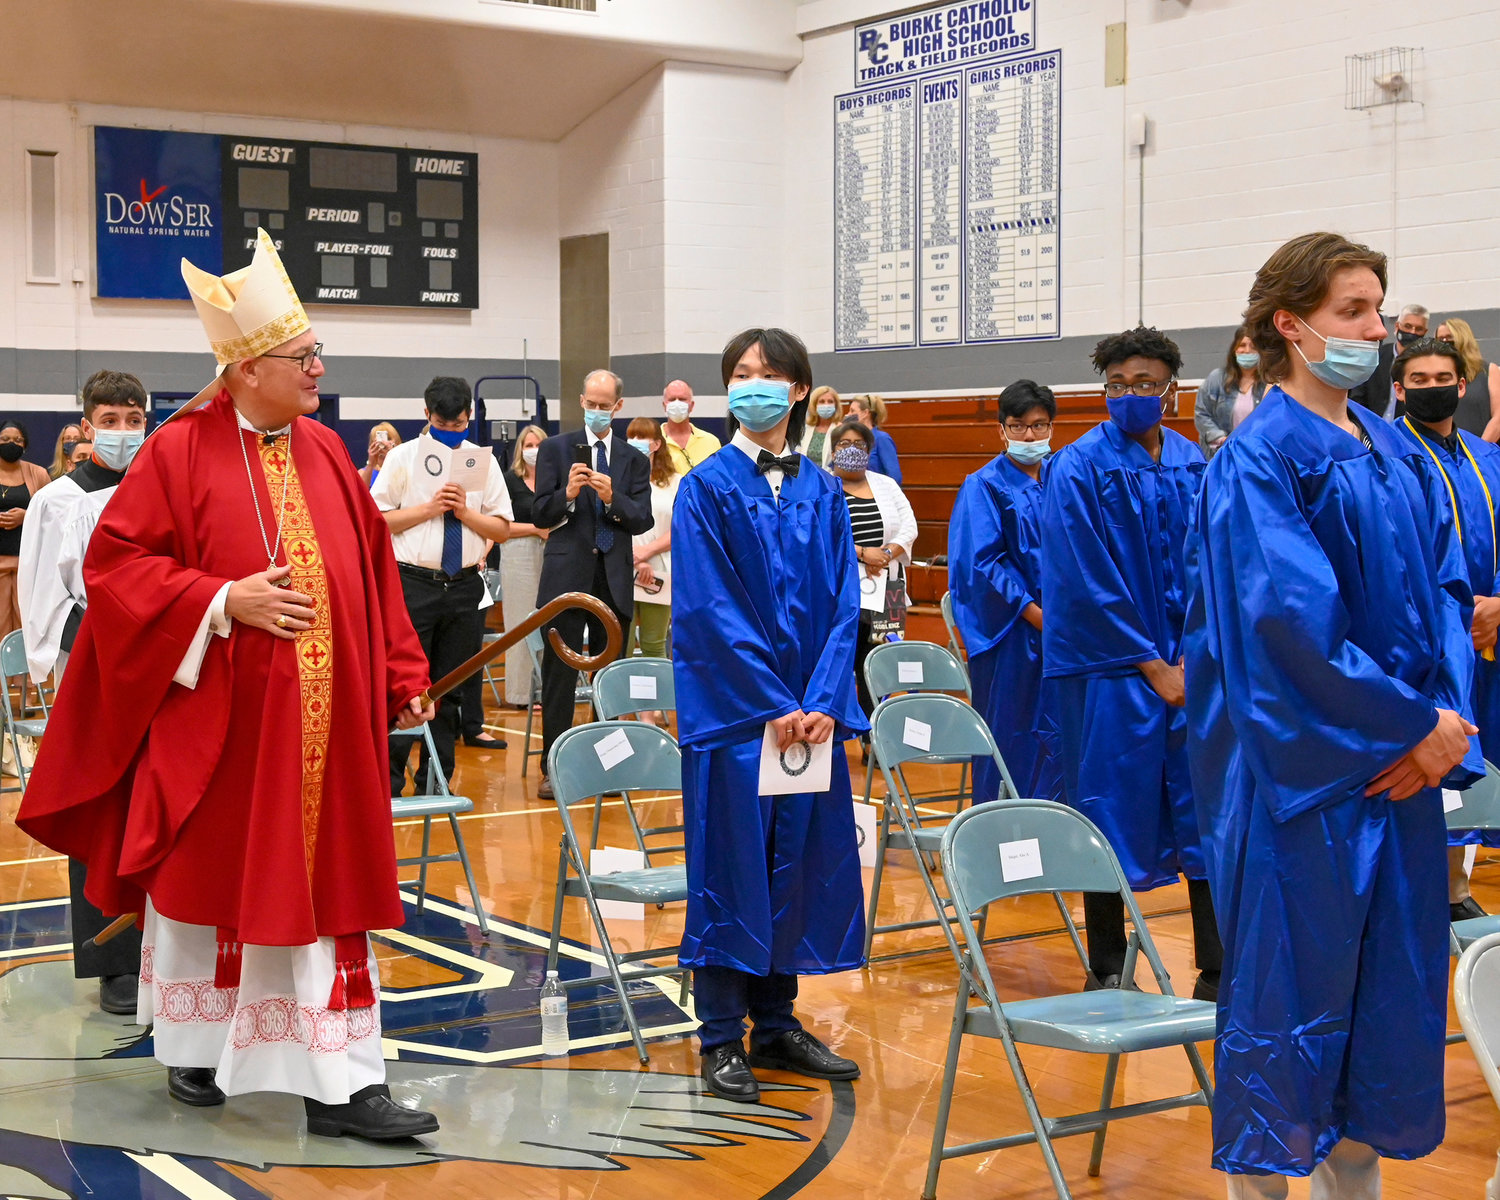 Cardinal Dolan enters the gymnasium for Mass.